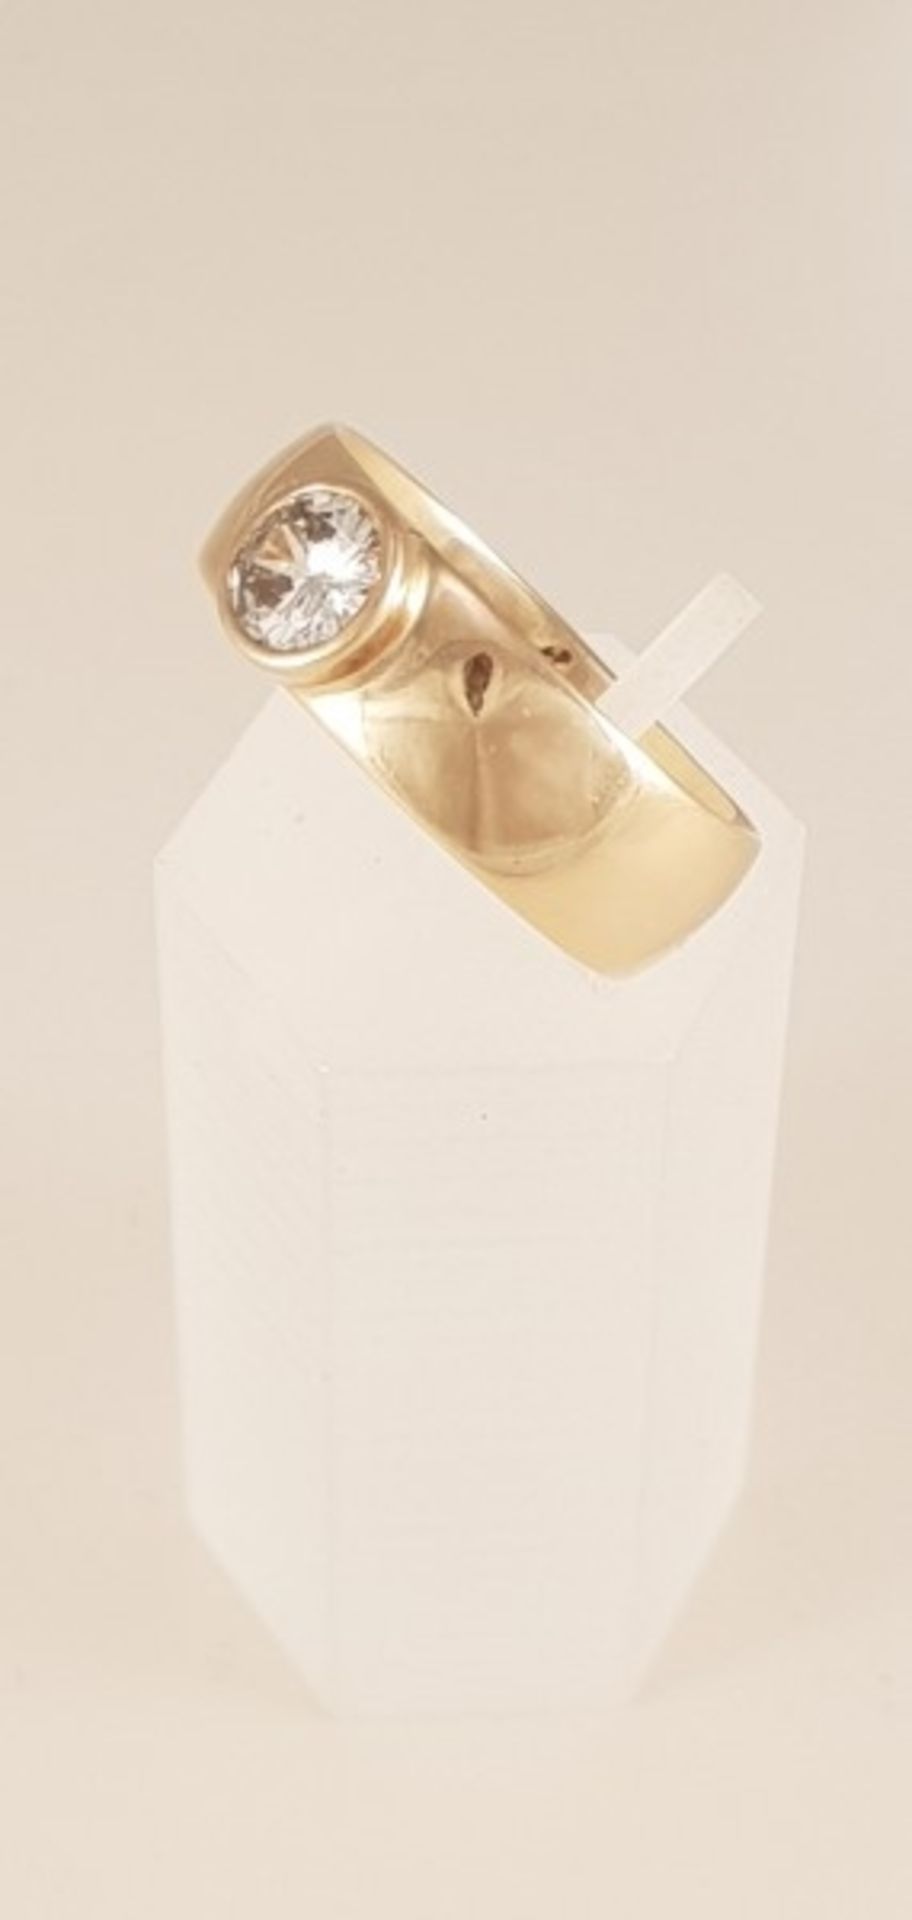 Diamant Solitätär Ring , Gold 585 , 0,5ct , RW56 , 5,8g , Hoher Farb/Reinheitsgrad, - Bild 2 aus 3